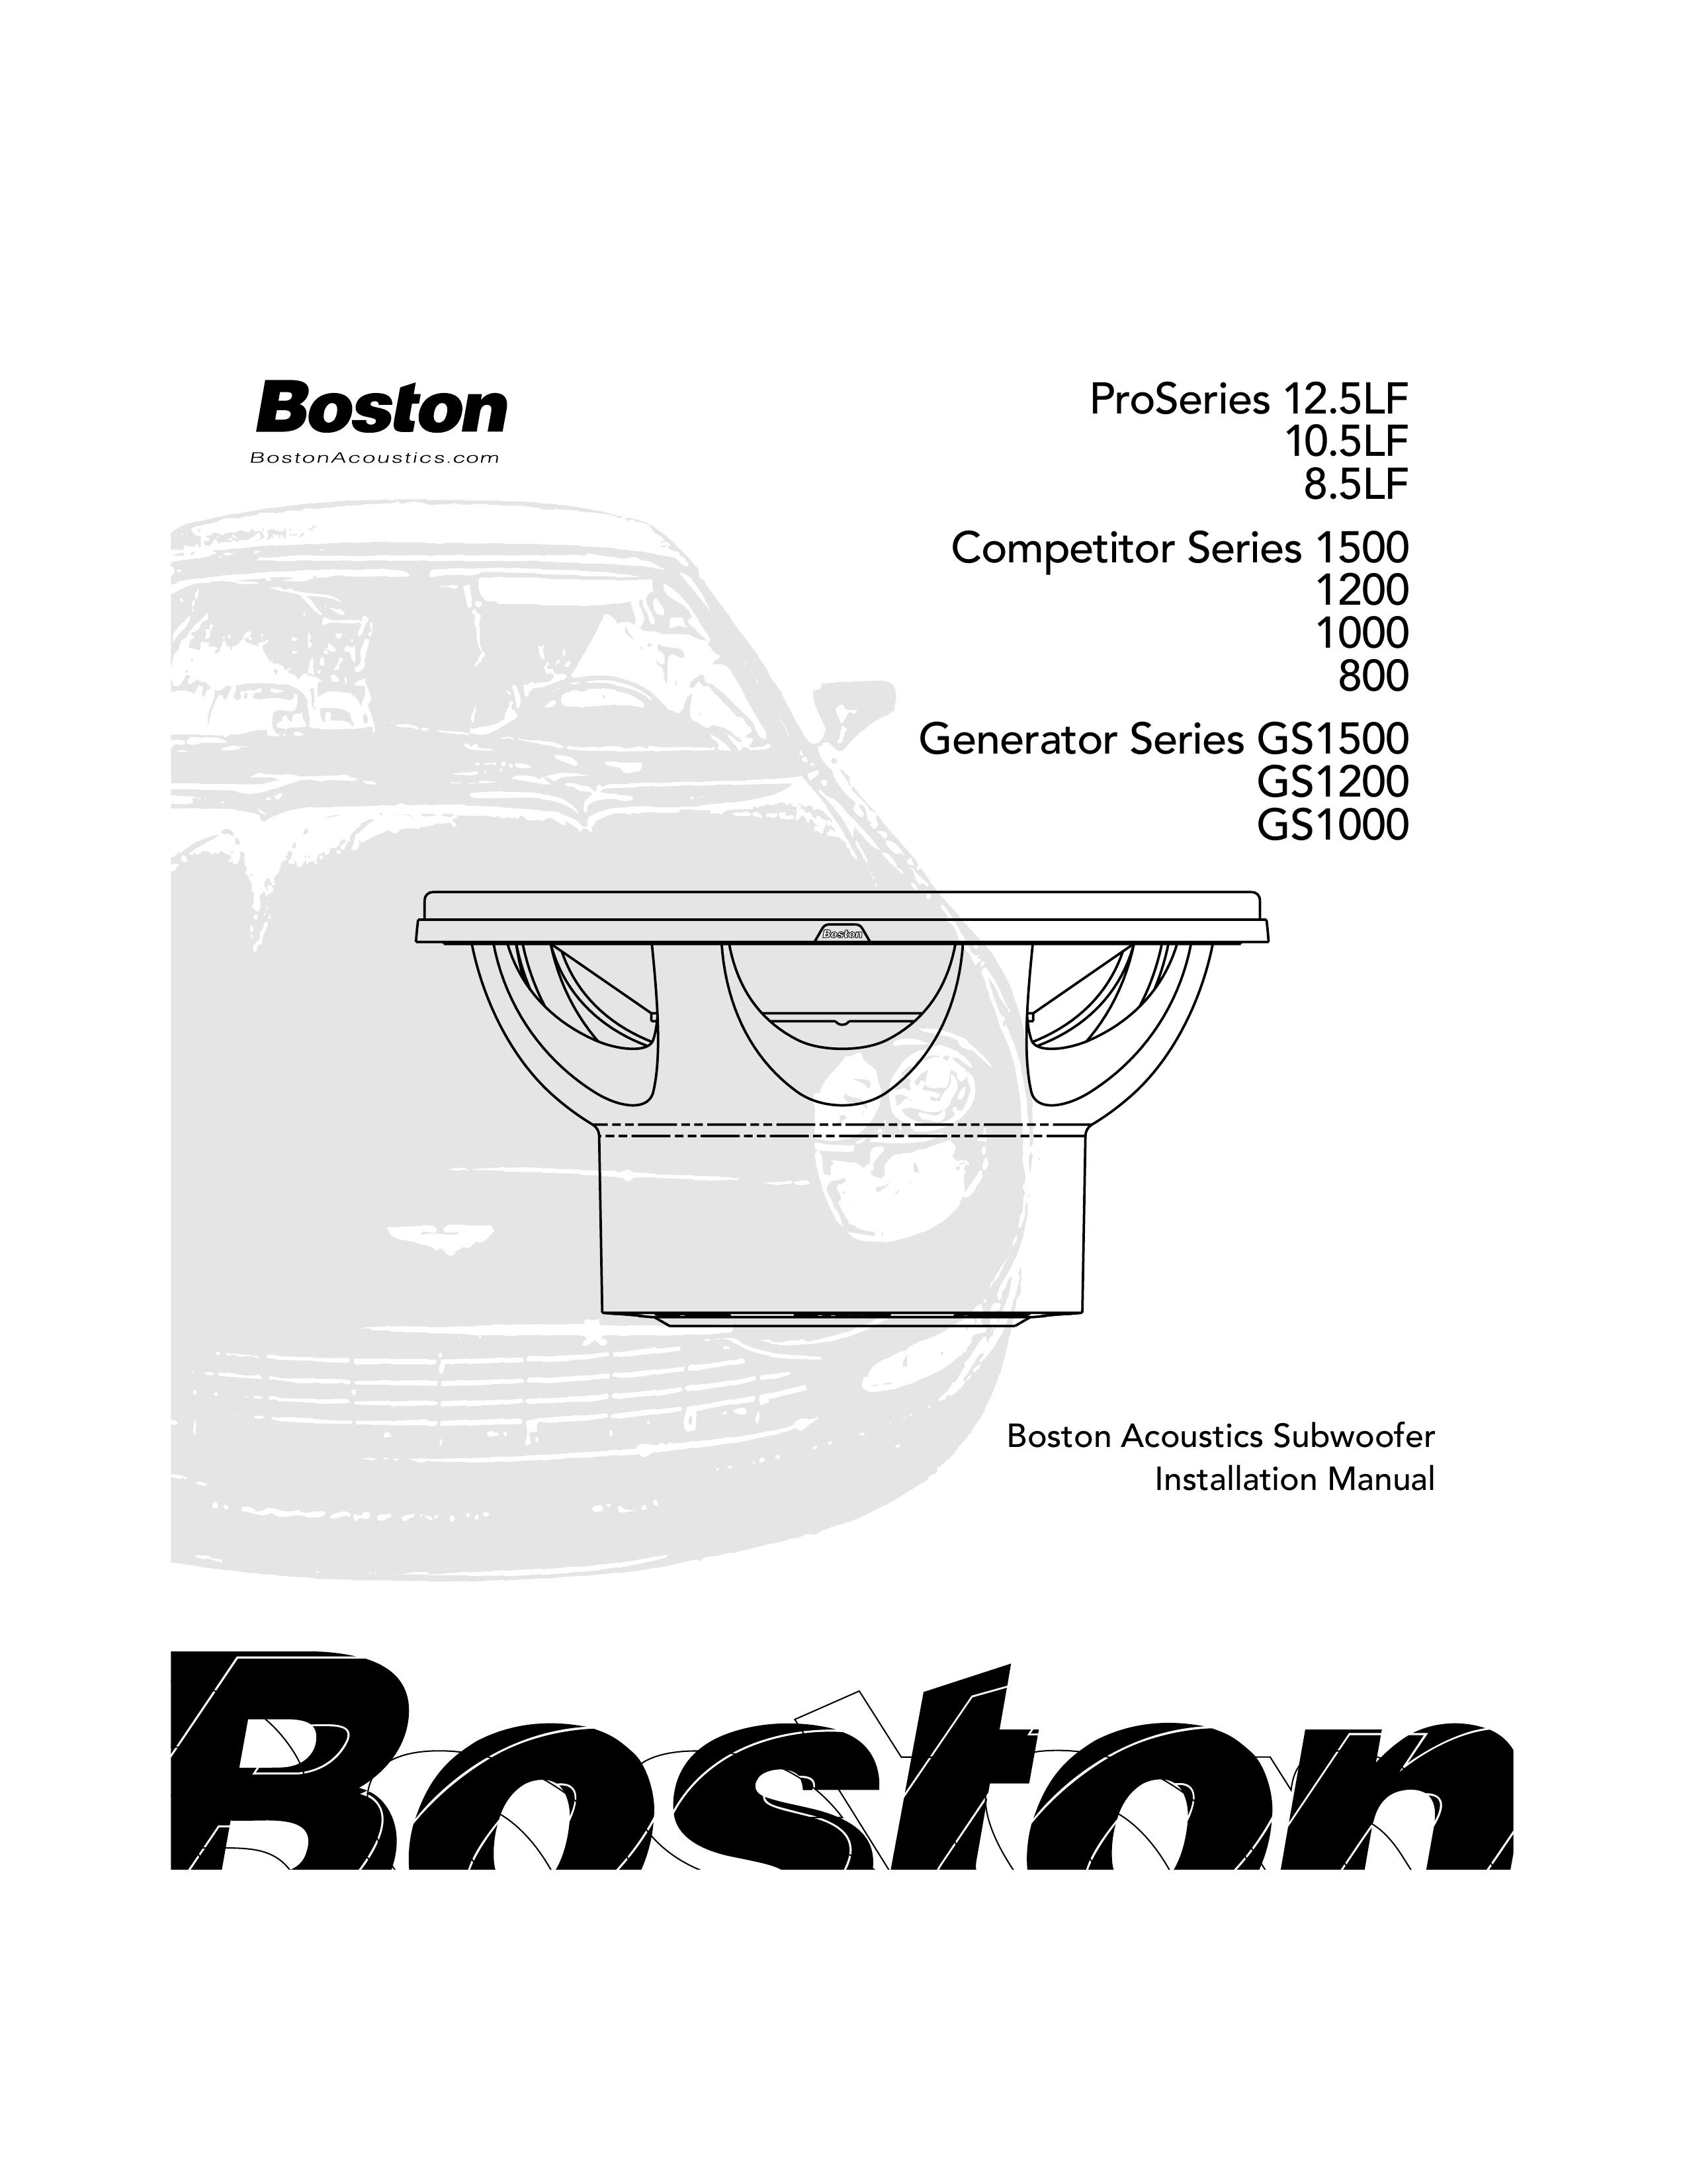 Boston Acoustics 10.5LF Recording Equipment User Manual